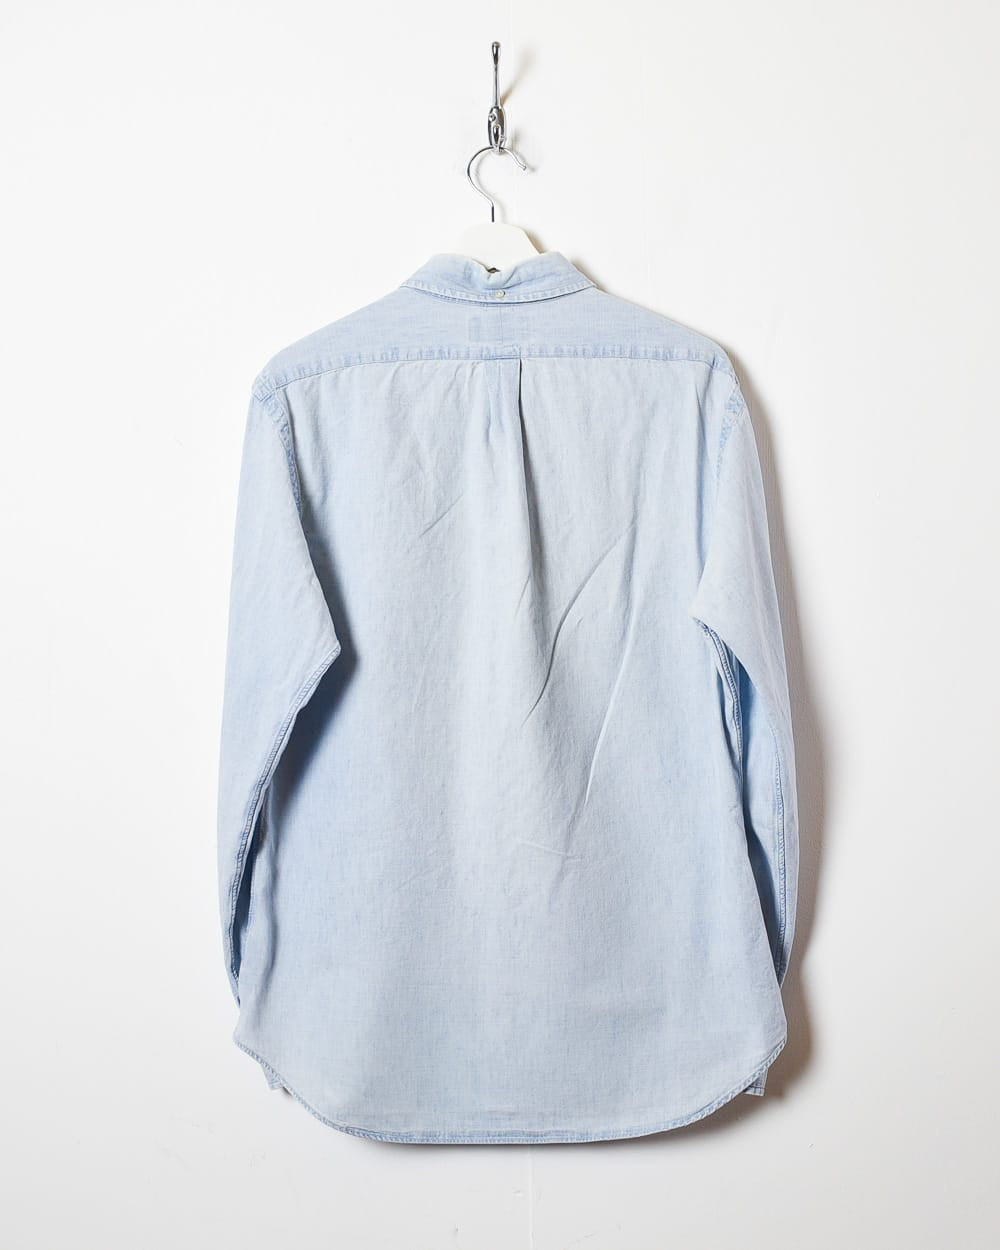 BabyBlue Polo Ralph Lauren Denim Shirt - Large